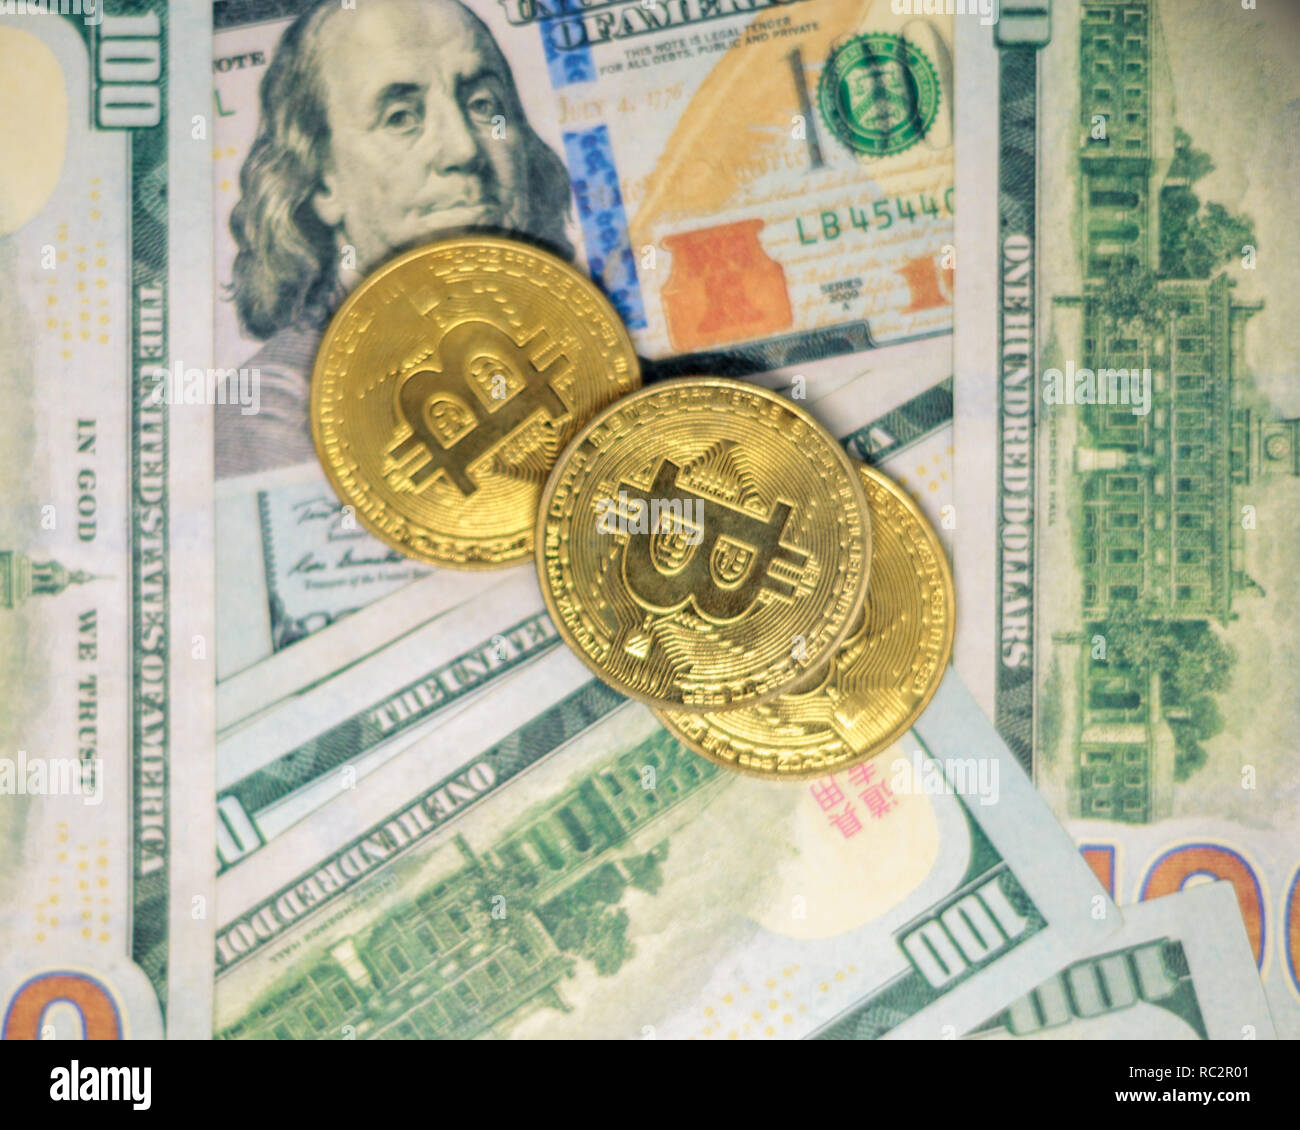 Digital currency bitcoin and US dollar bills Stock Photo